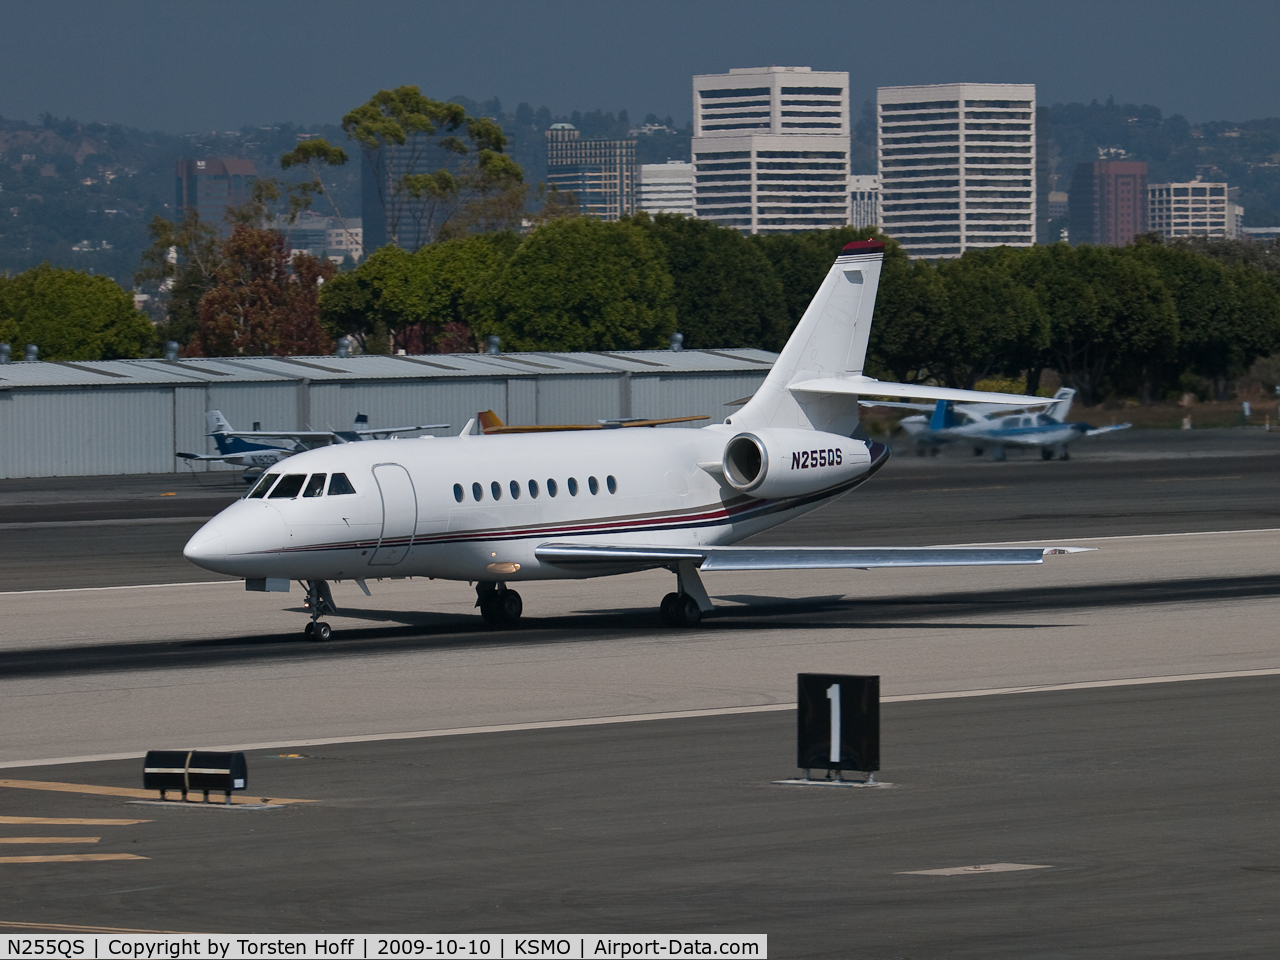 N255QS, 2001 Dassault Falcon 2000 C/N 155, N255QS departing from RWY 21